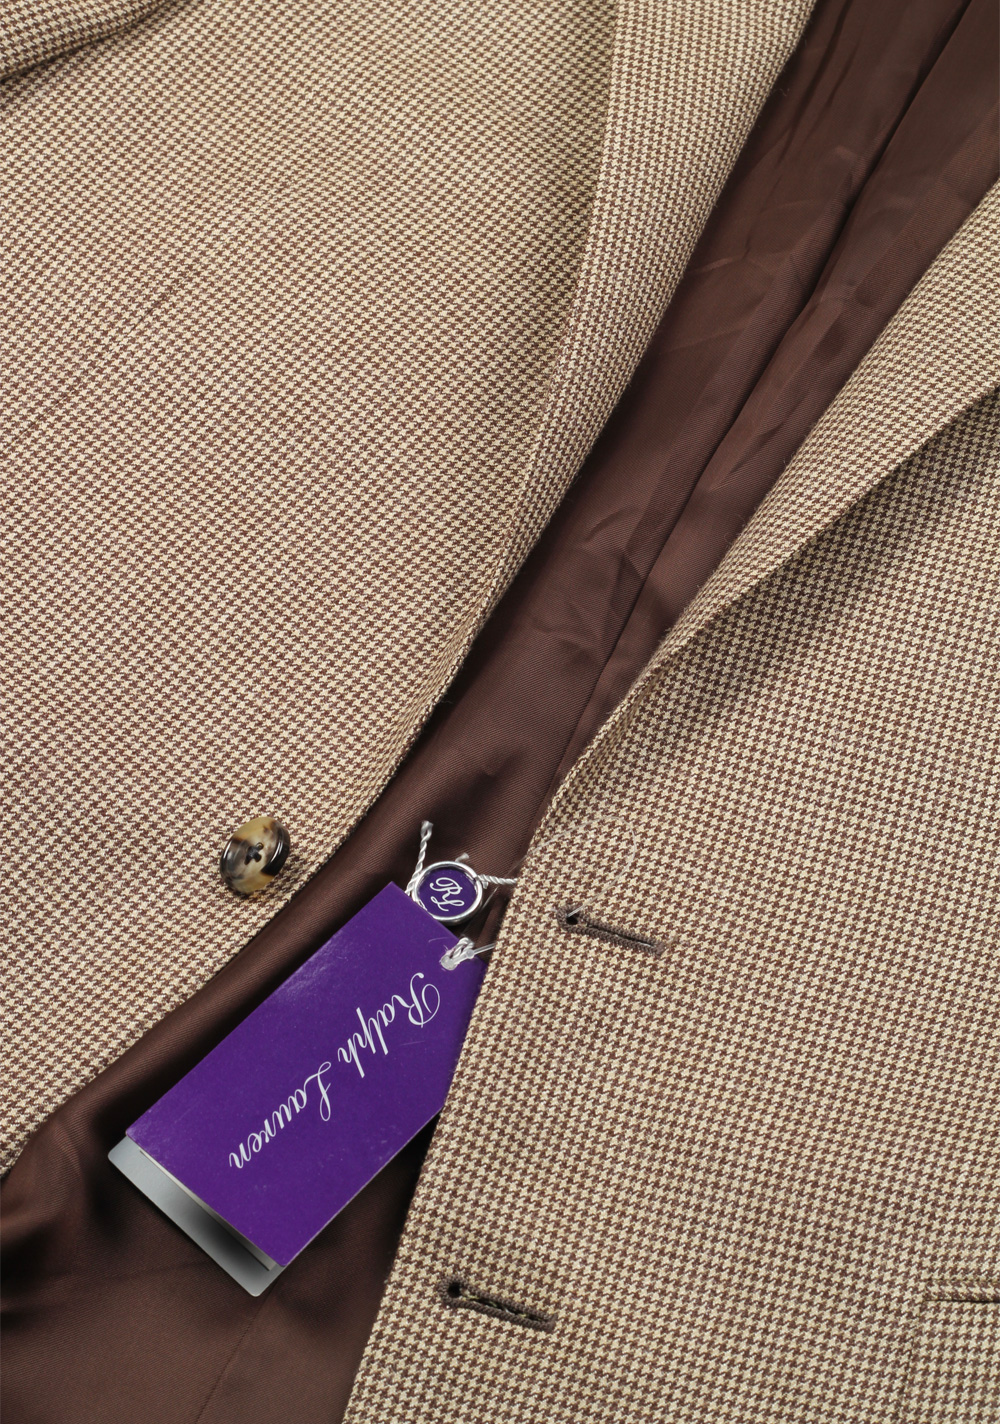 Ralph Lauren Purple Label Brown Sport Coat Size 48 / 38R U.S. In Wool Silk Linen | Costume Limité